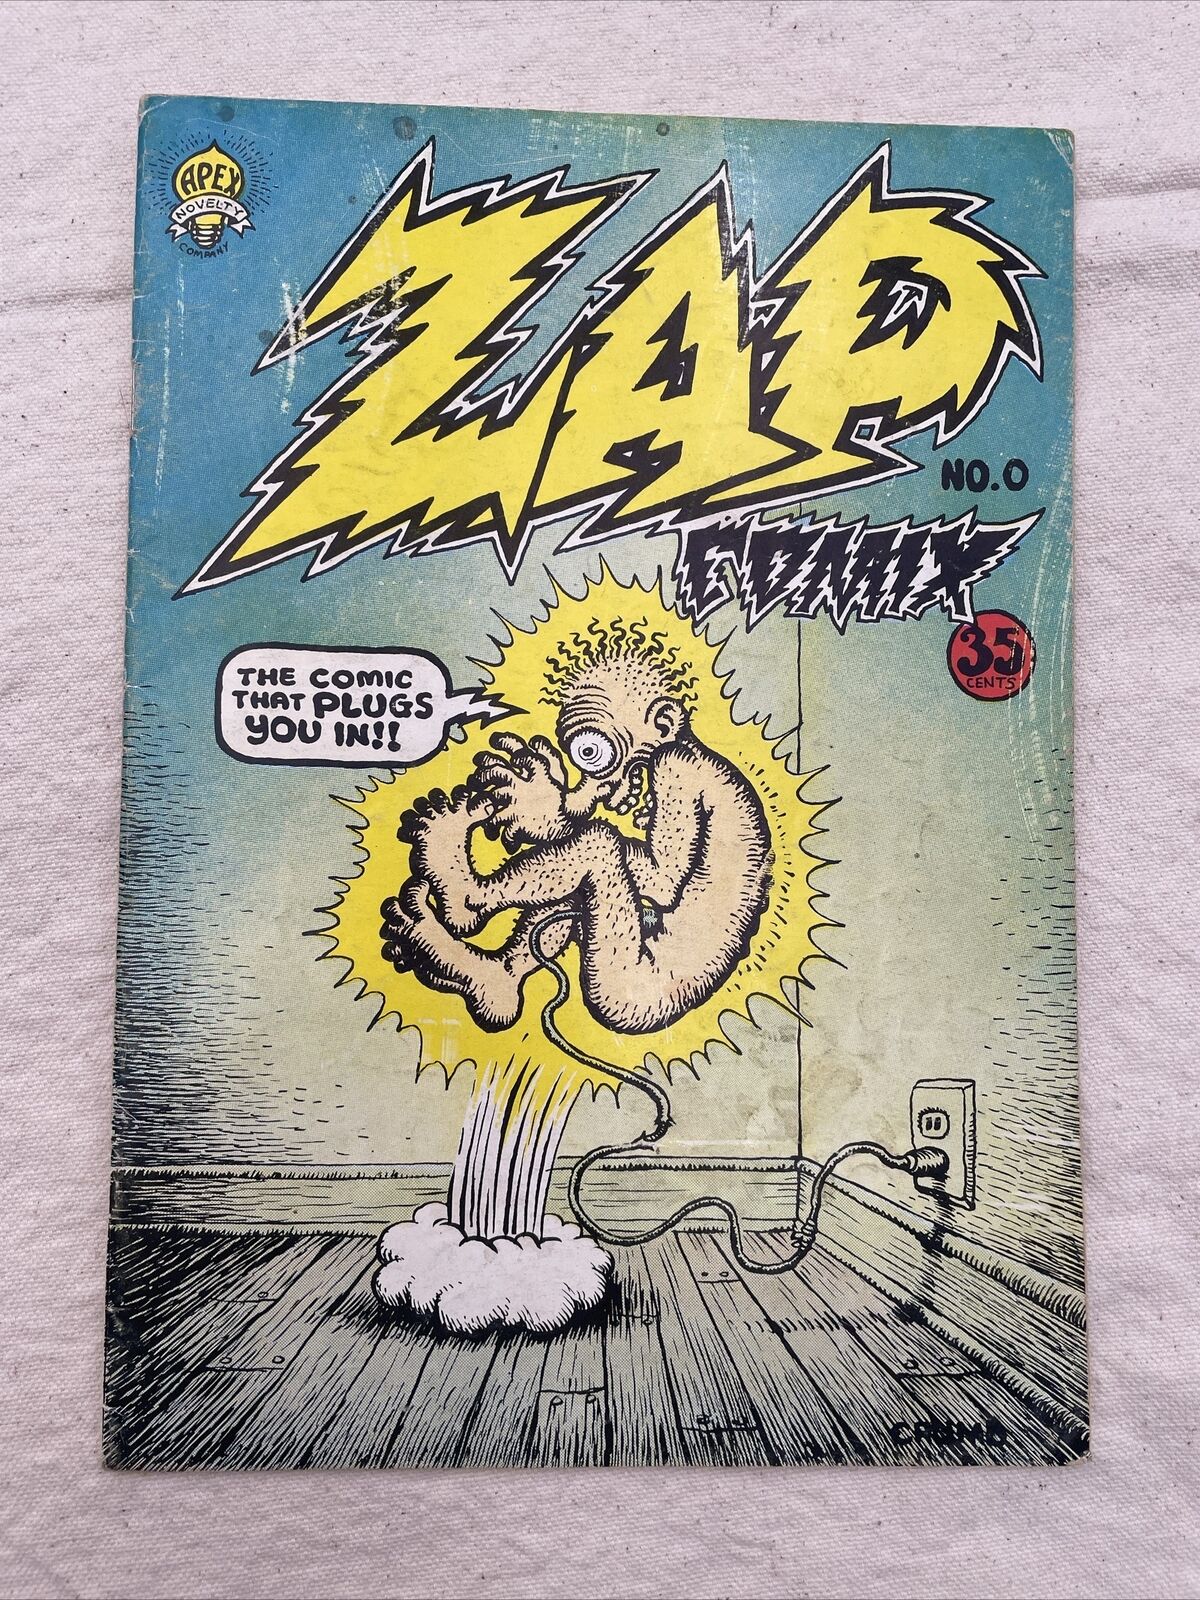 ZAP Comix Comic Book No 0 Oct 1967 Original 35 Cents Vintage Apex Novelty